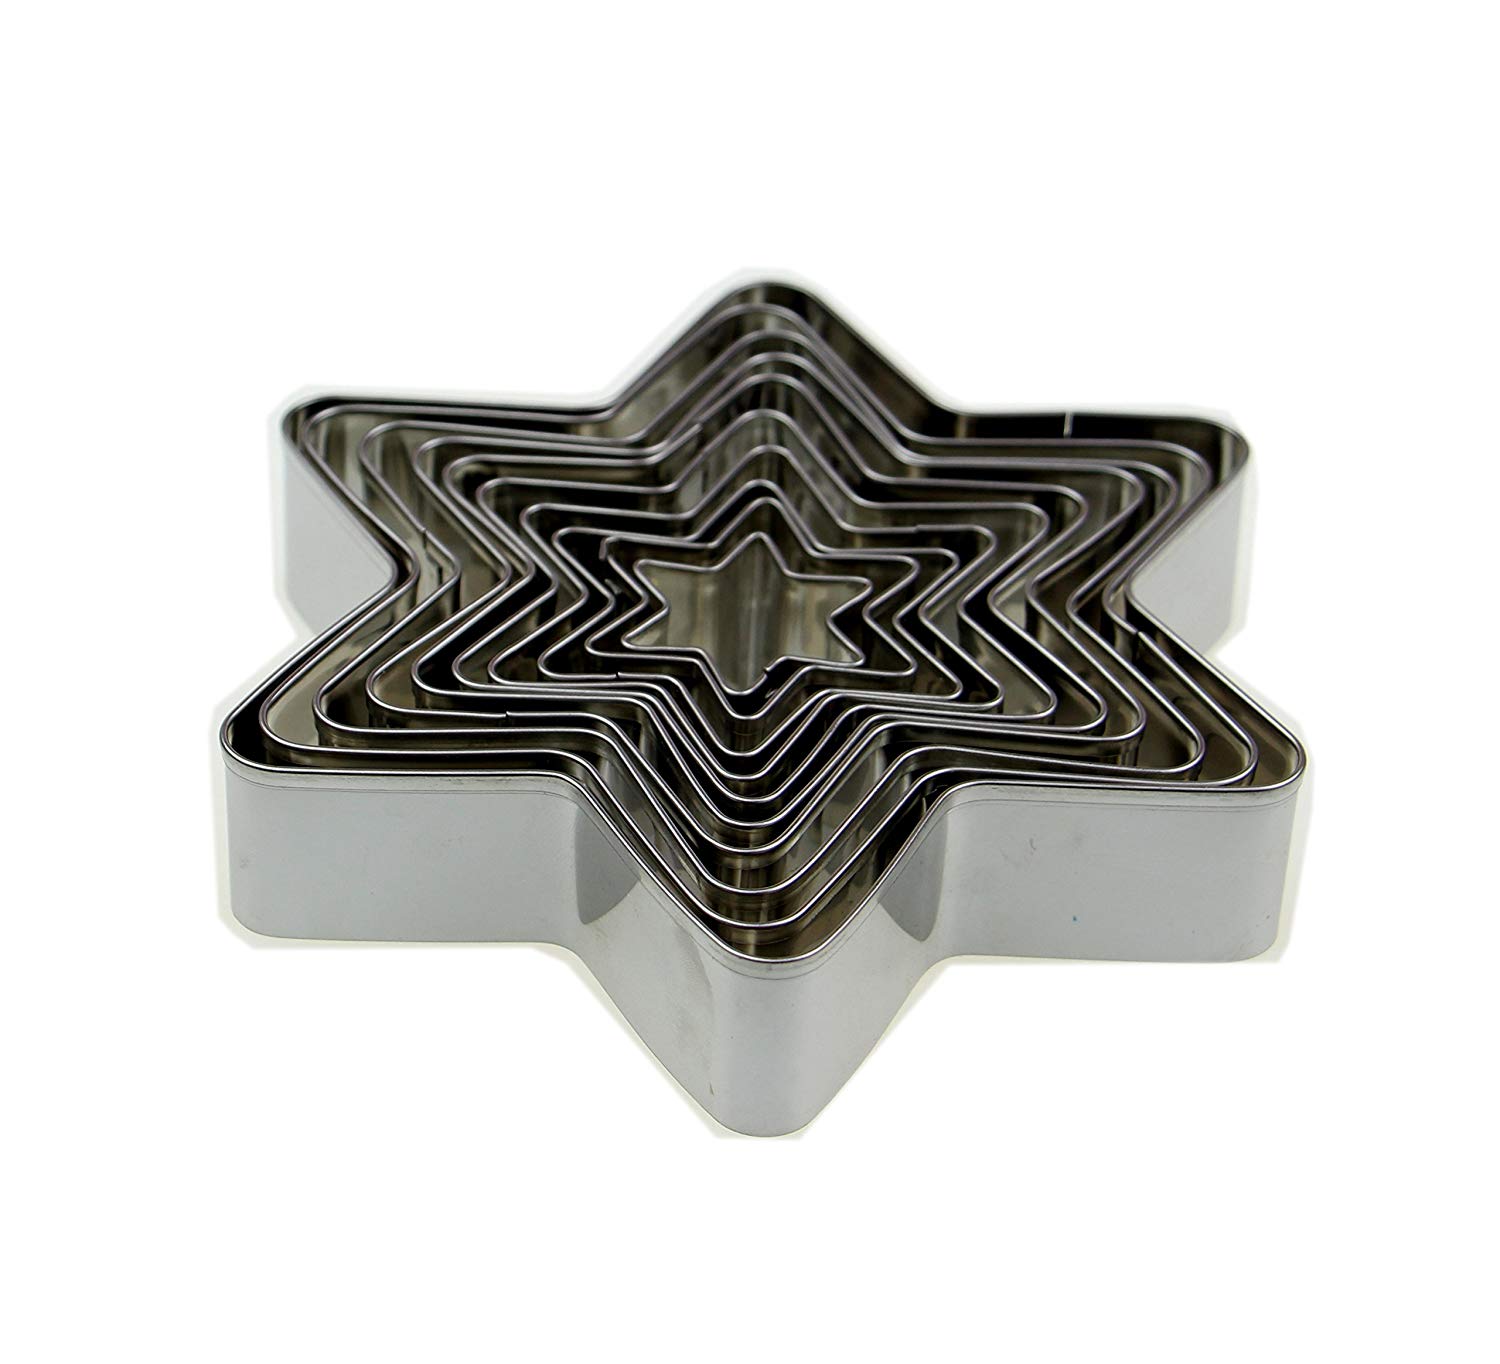 10 Piece Stainless Steel Six Point Star hexagram cookie cutter set